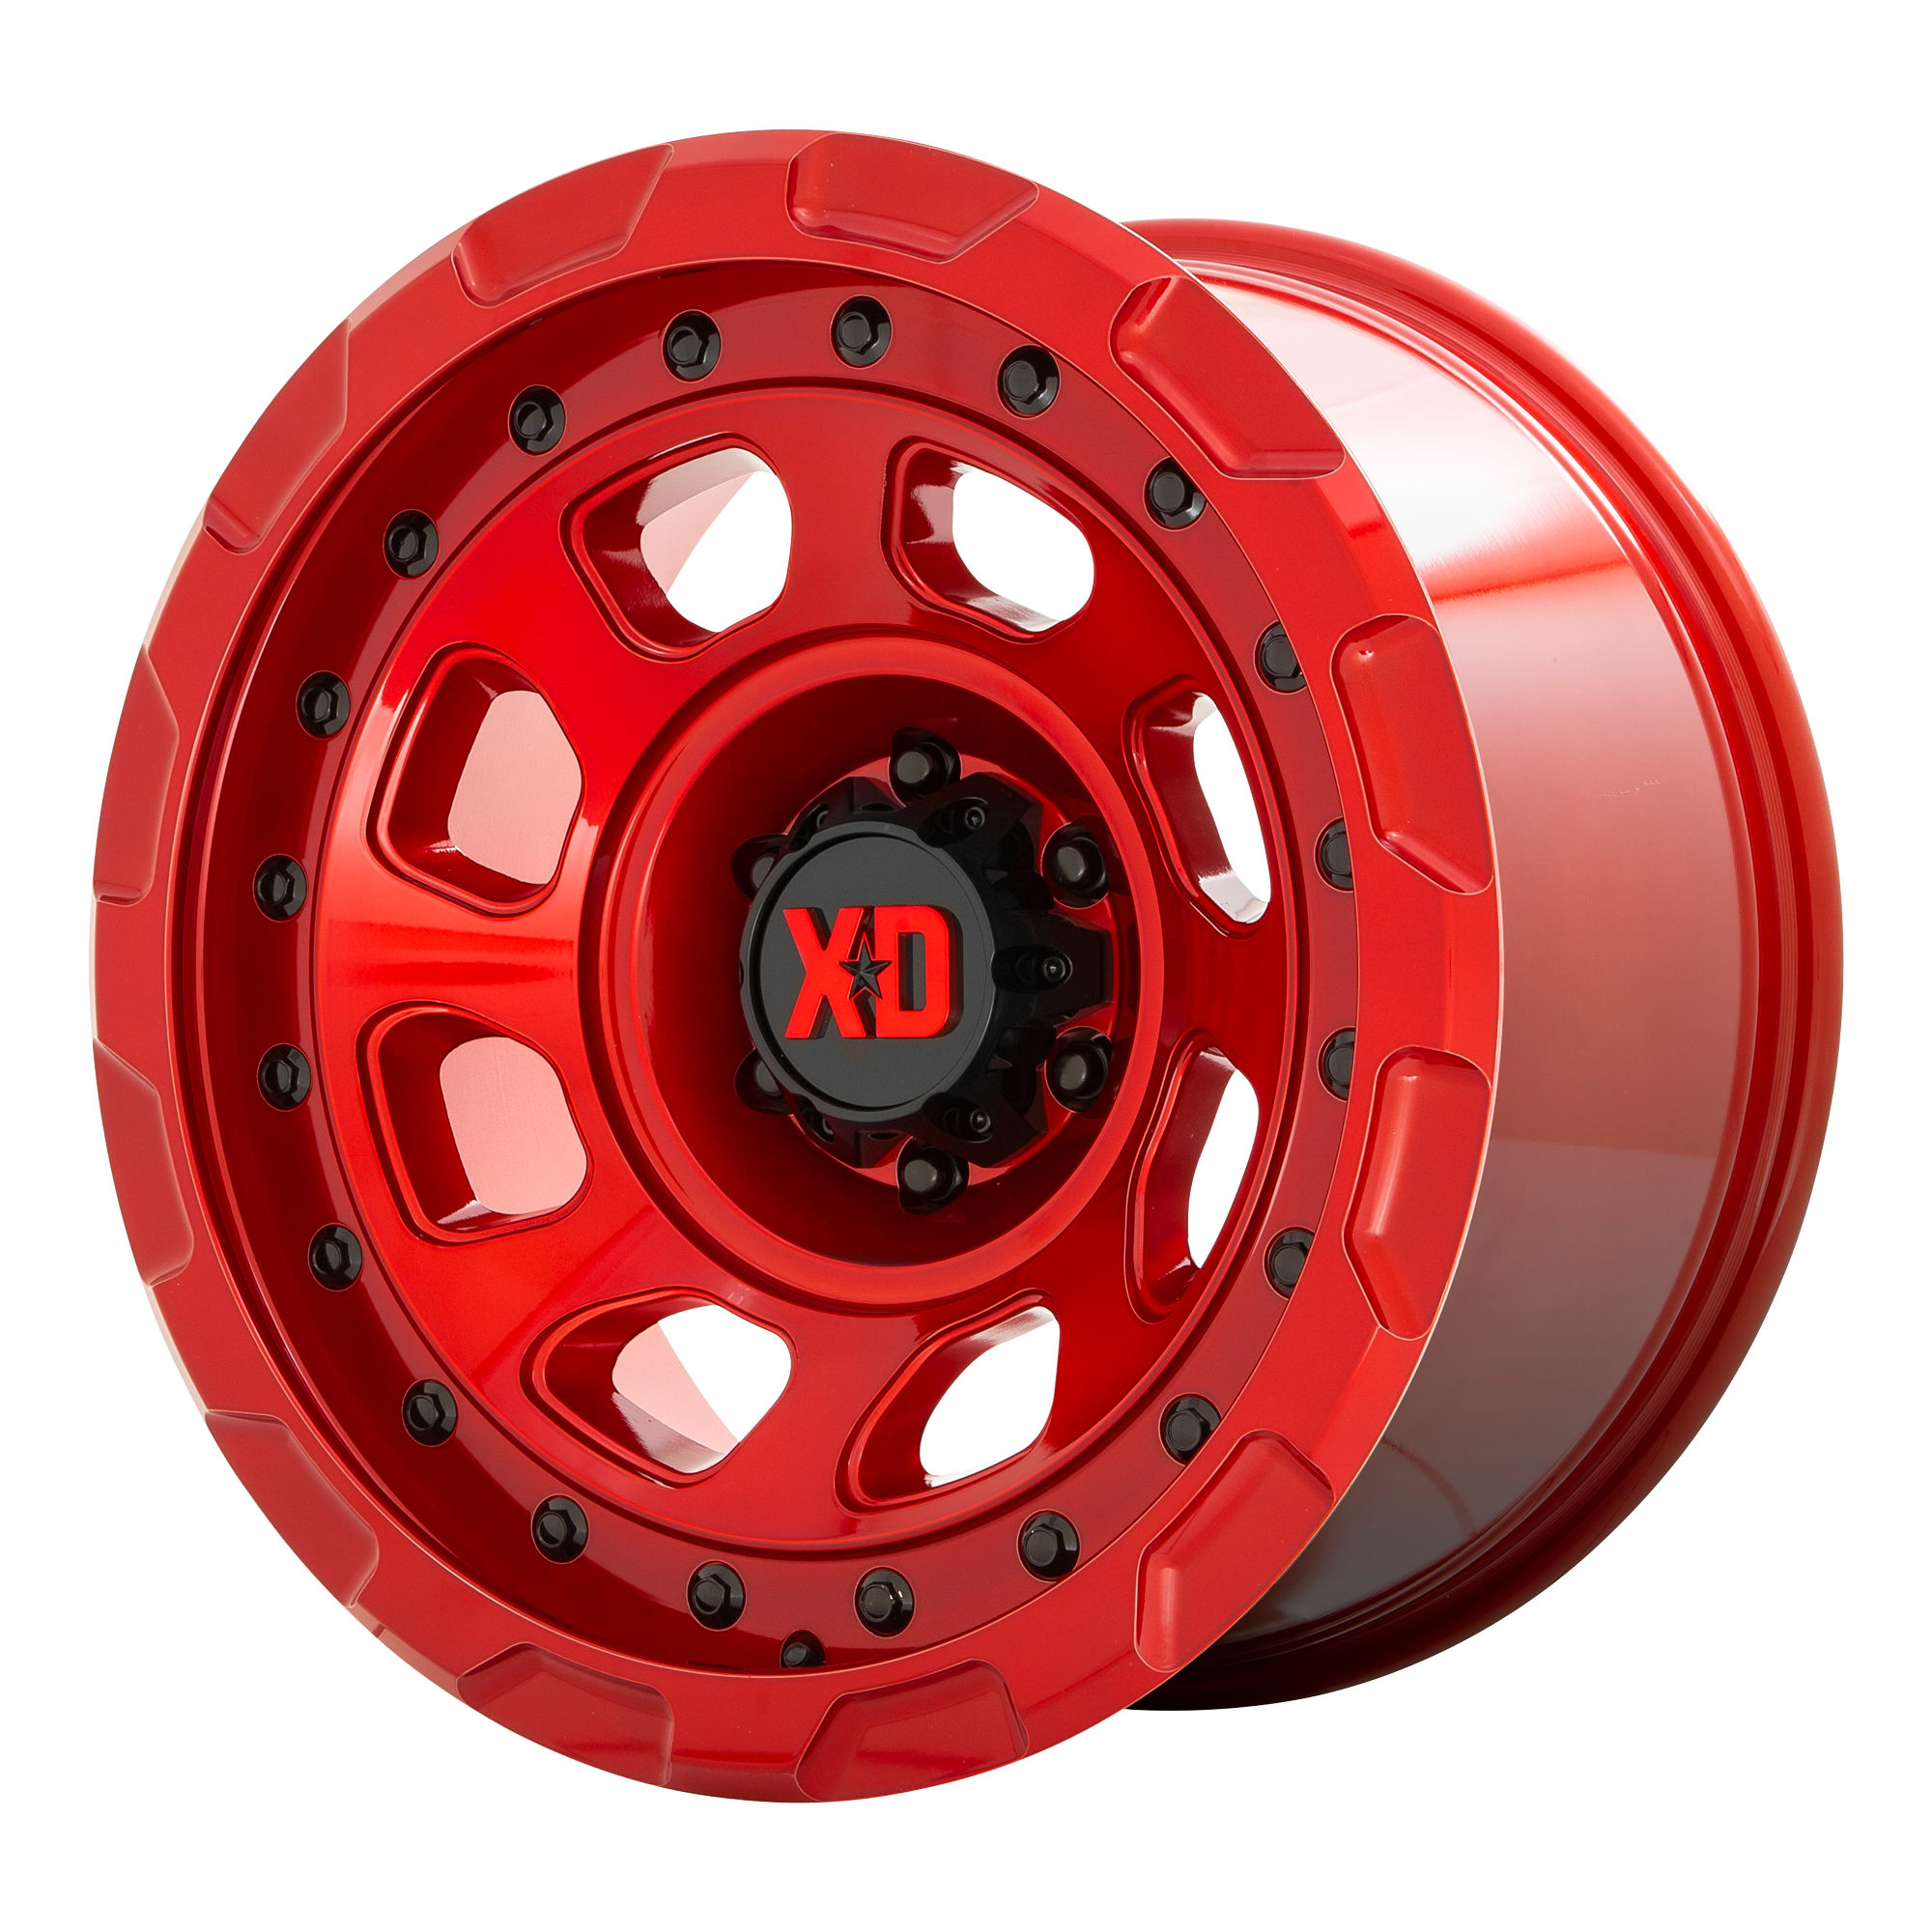 XD 20"x9" Non-Chrome Candy Red Custom Wheel ARSWCWXD86129063900